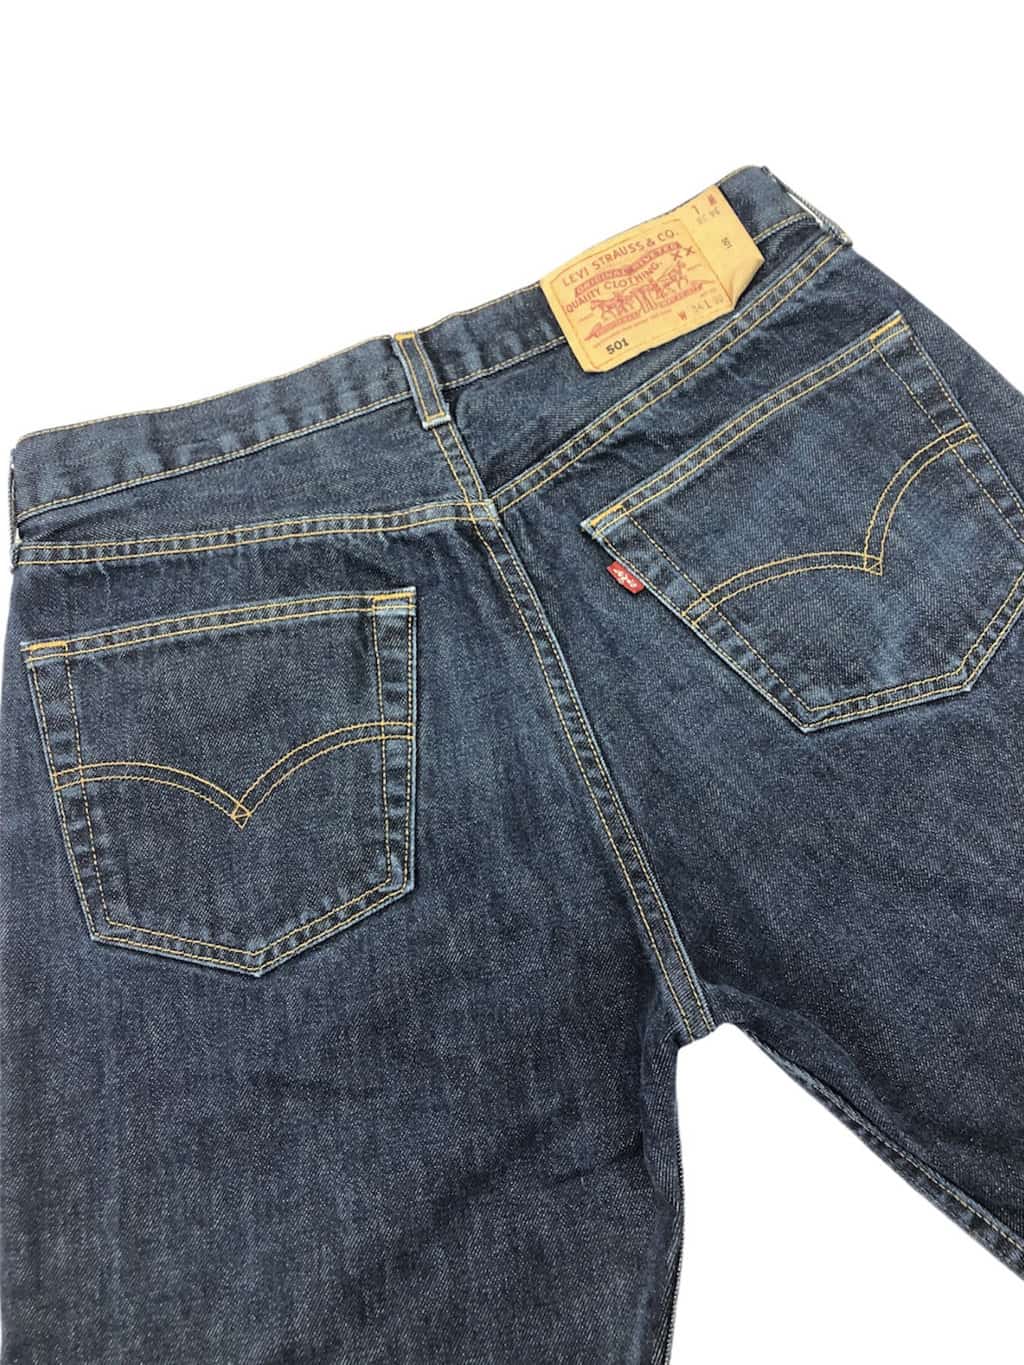 Y2K Dark Wash Mid Rise 501S Levis Jeans In Deep Navy Blue Denim - W33 X L26  - St Cyr Vintage